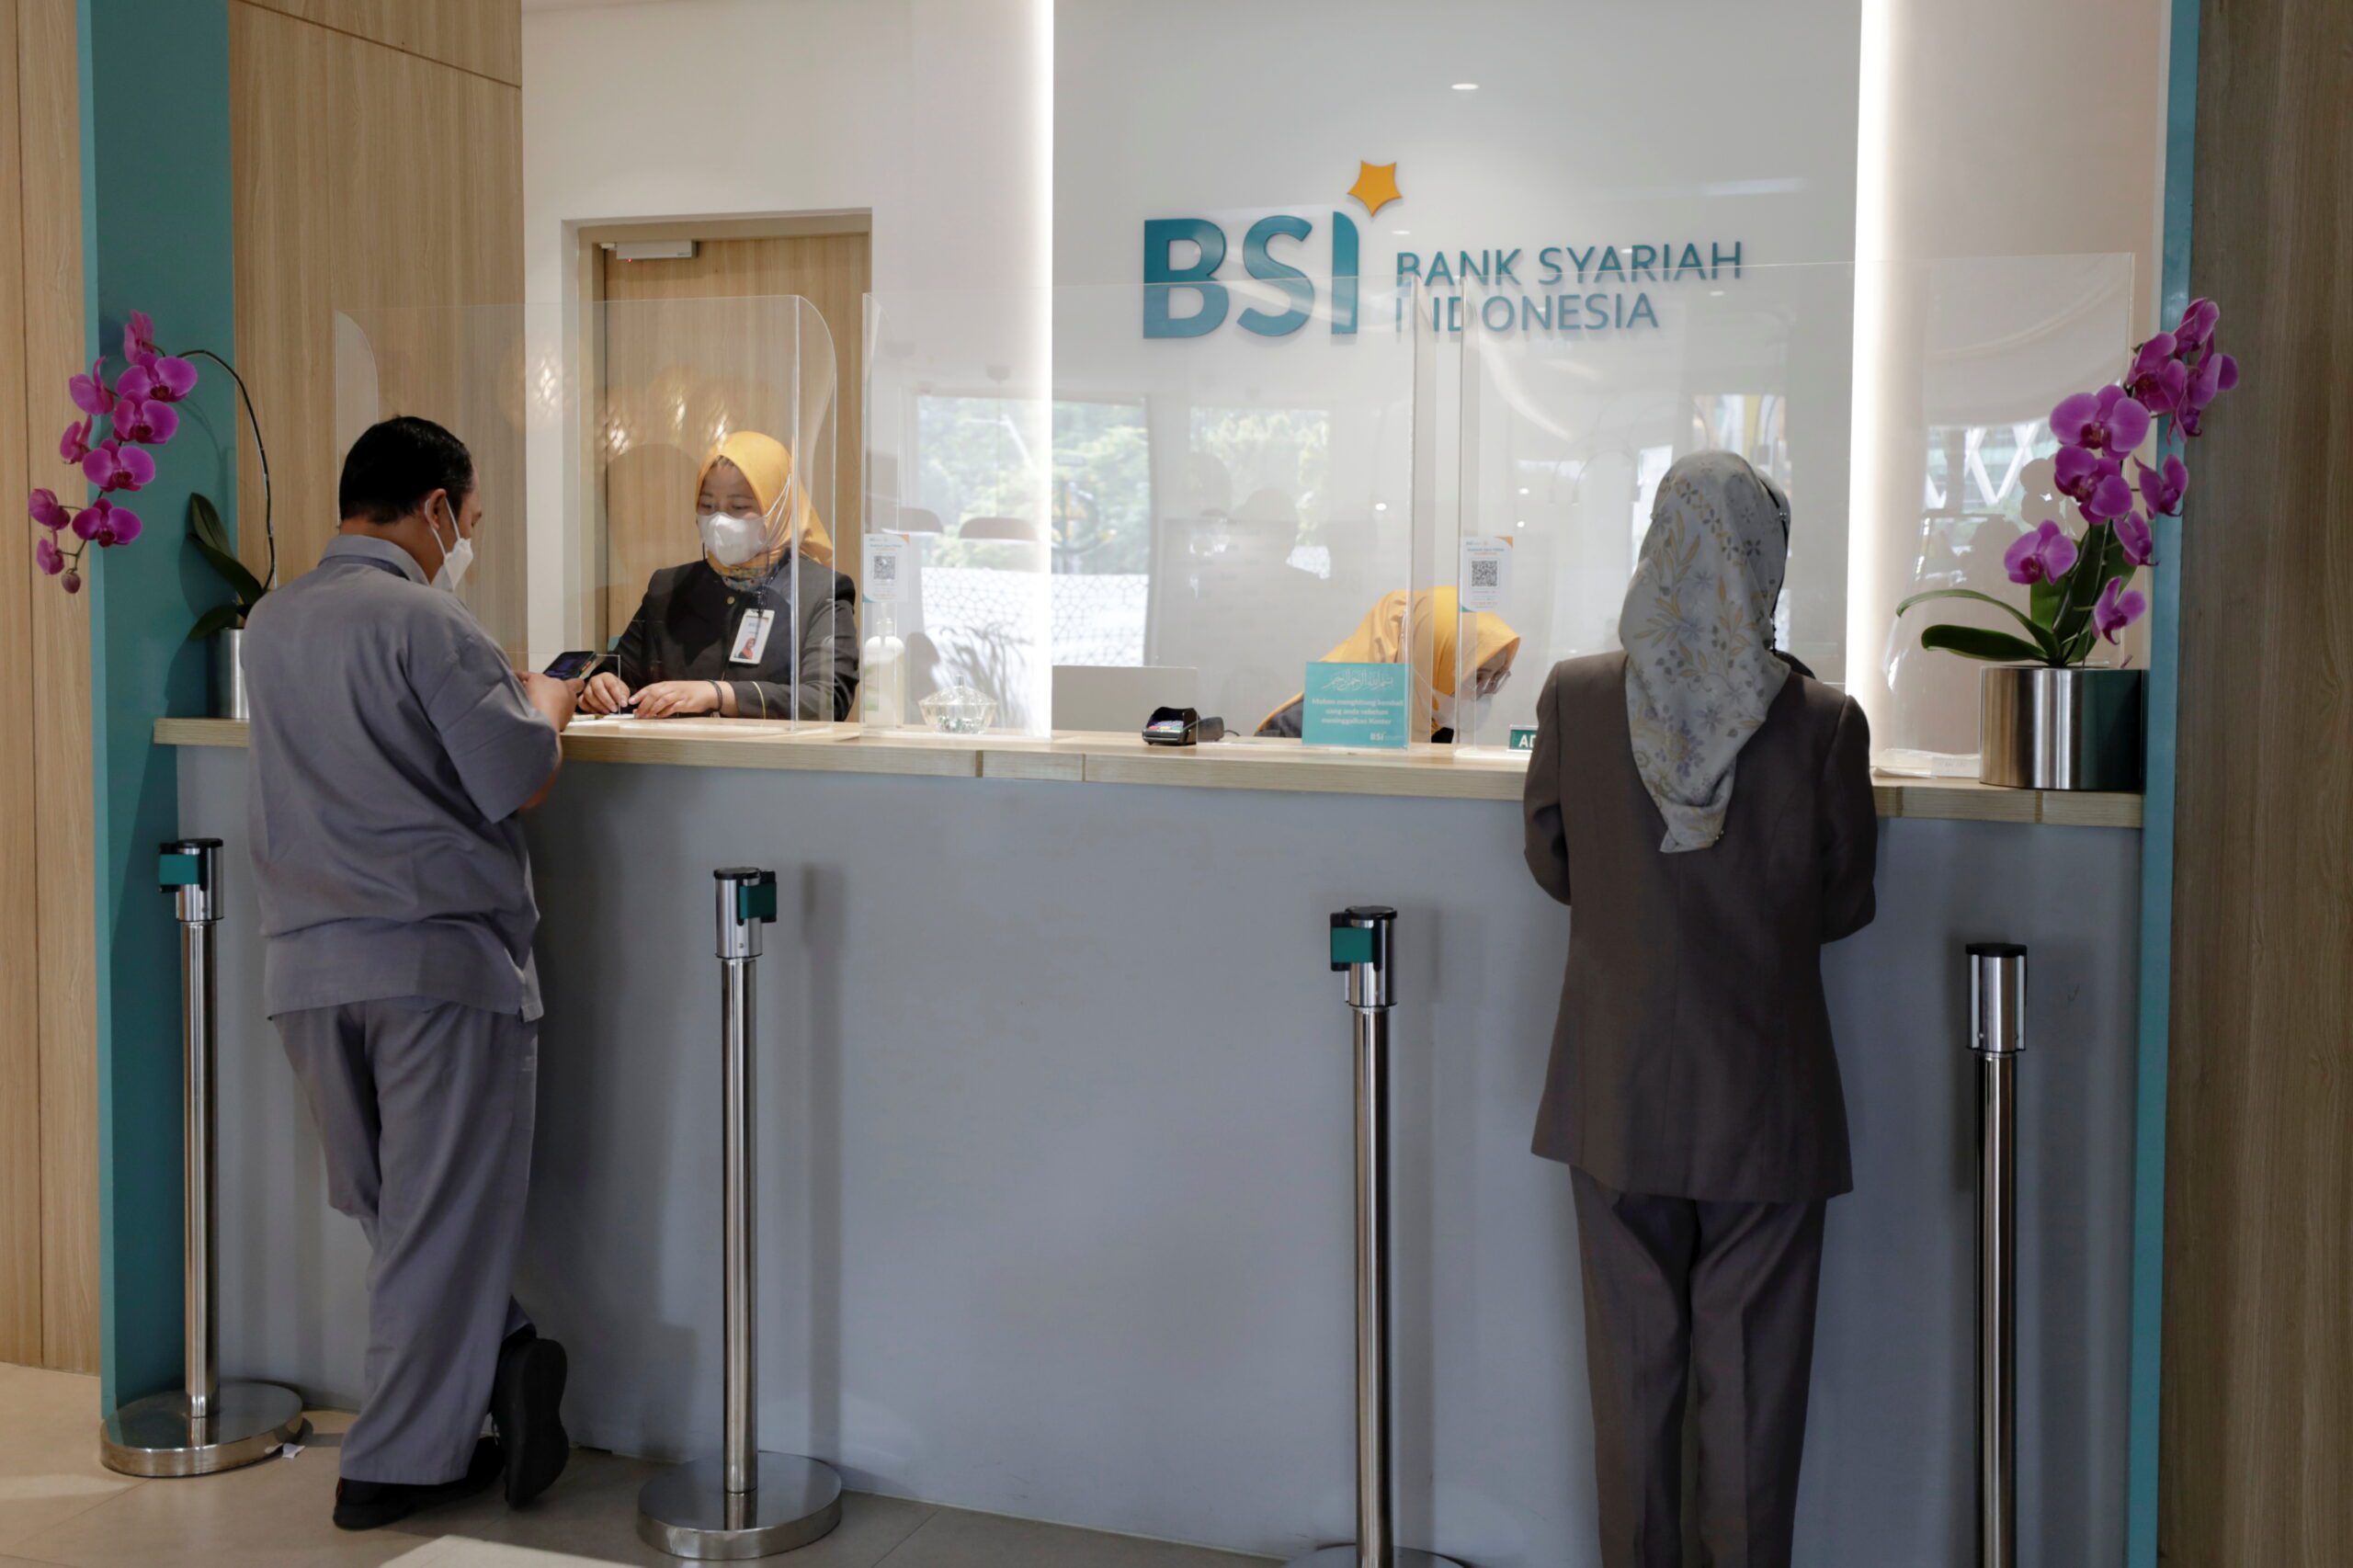 Bank tellers serve customers at Bank Syariah Indonesia in Jakarta, Indonesia, June 8, 2021. REUTERS/Willy Kurniawan